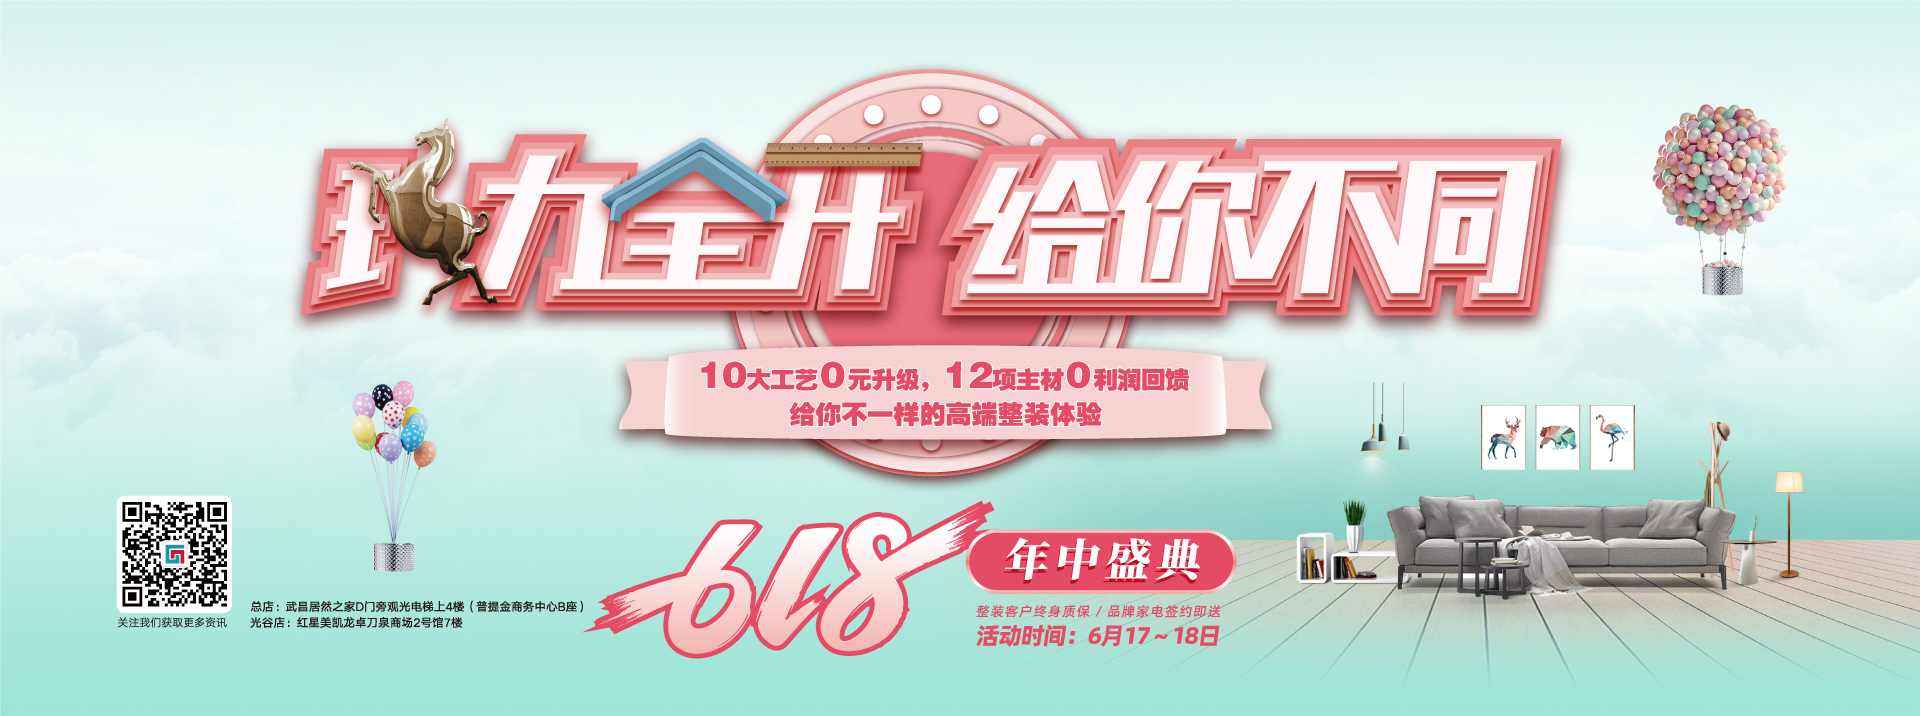 qwertyuiop中国大鸡巴六西格玛装饰活动海报